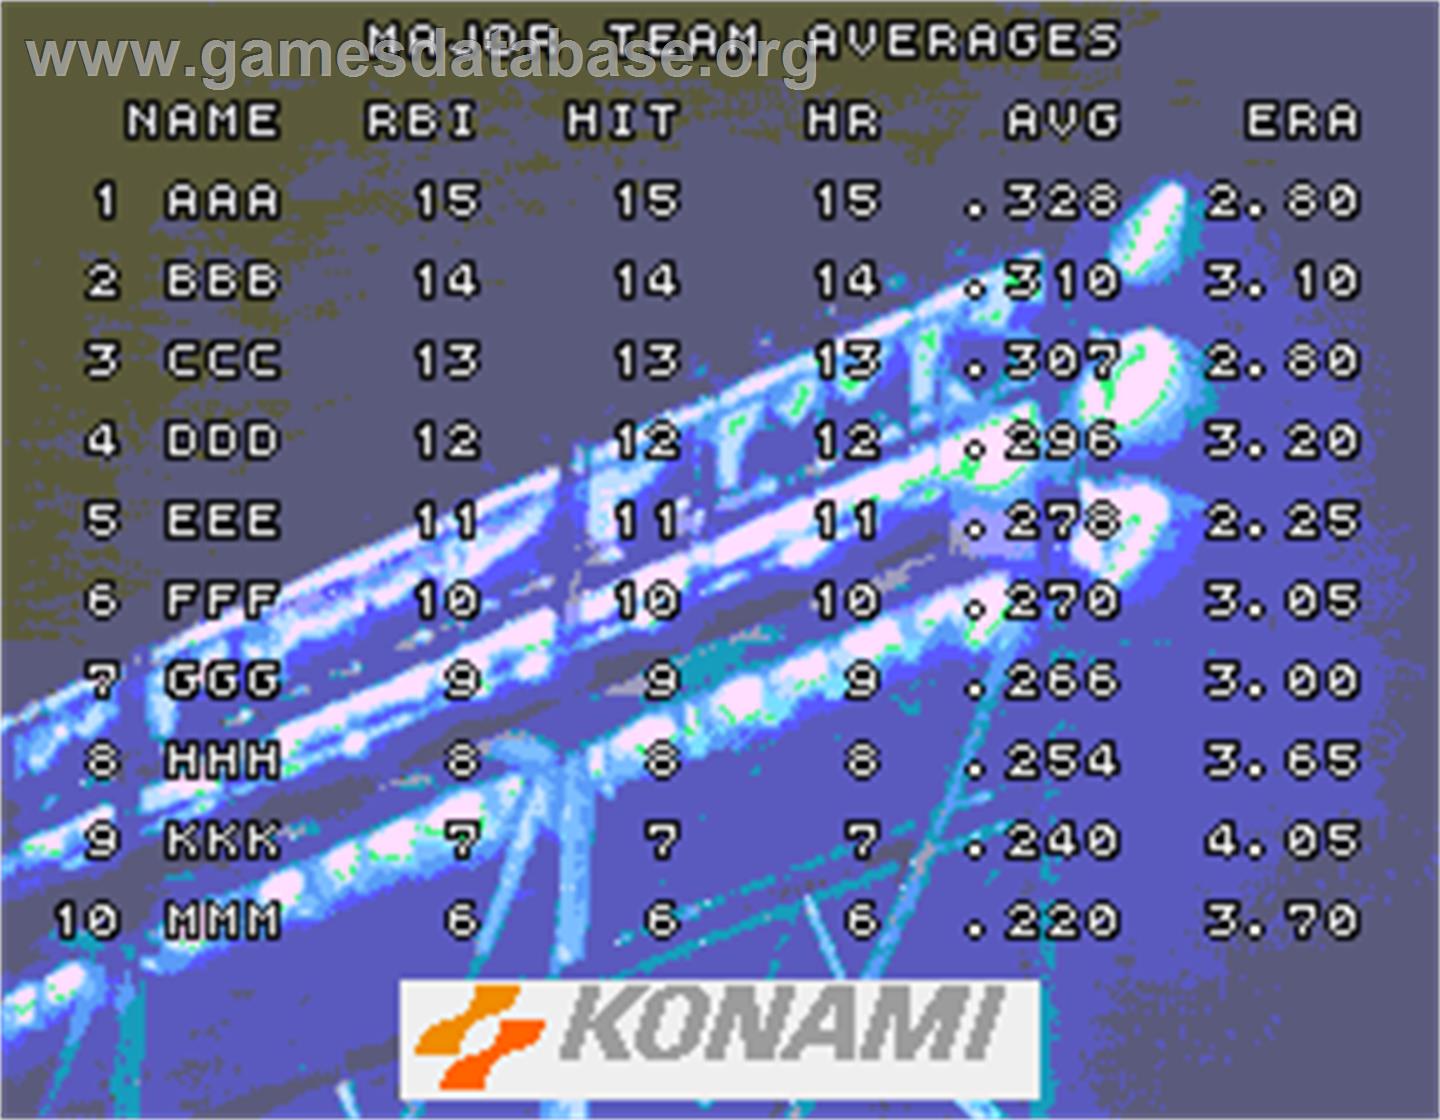 Main Stadium - Arcade - Artwork - High Score Screen